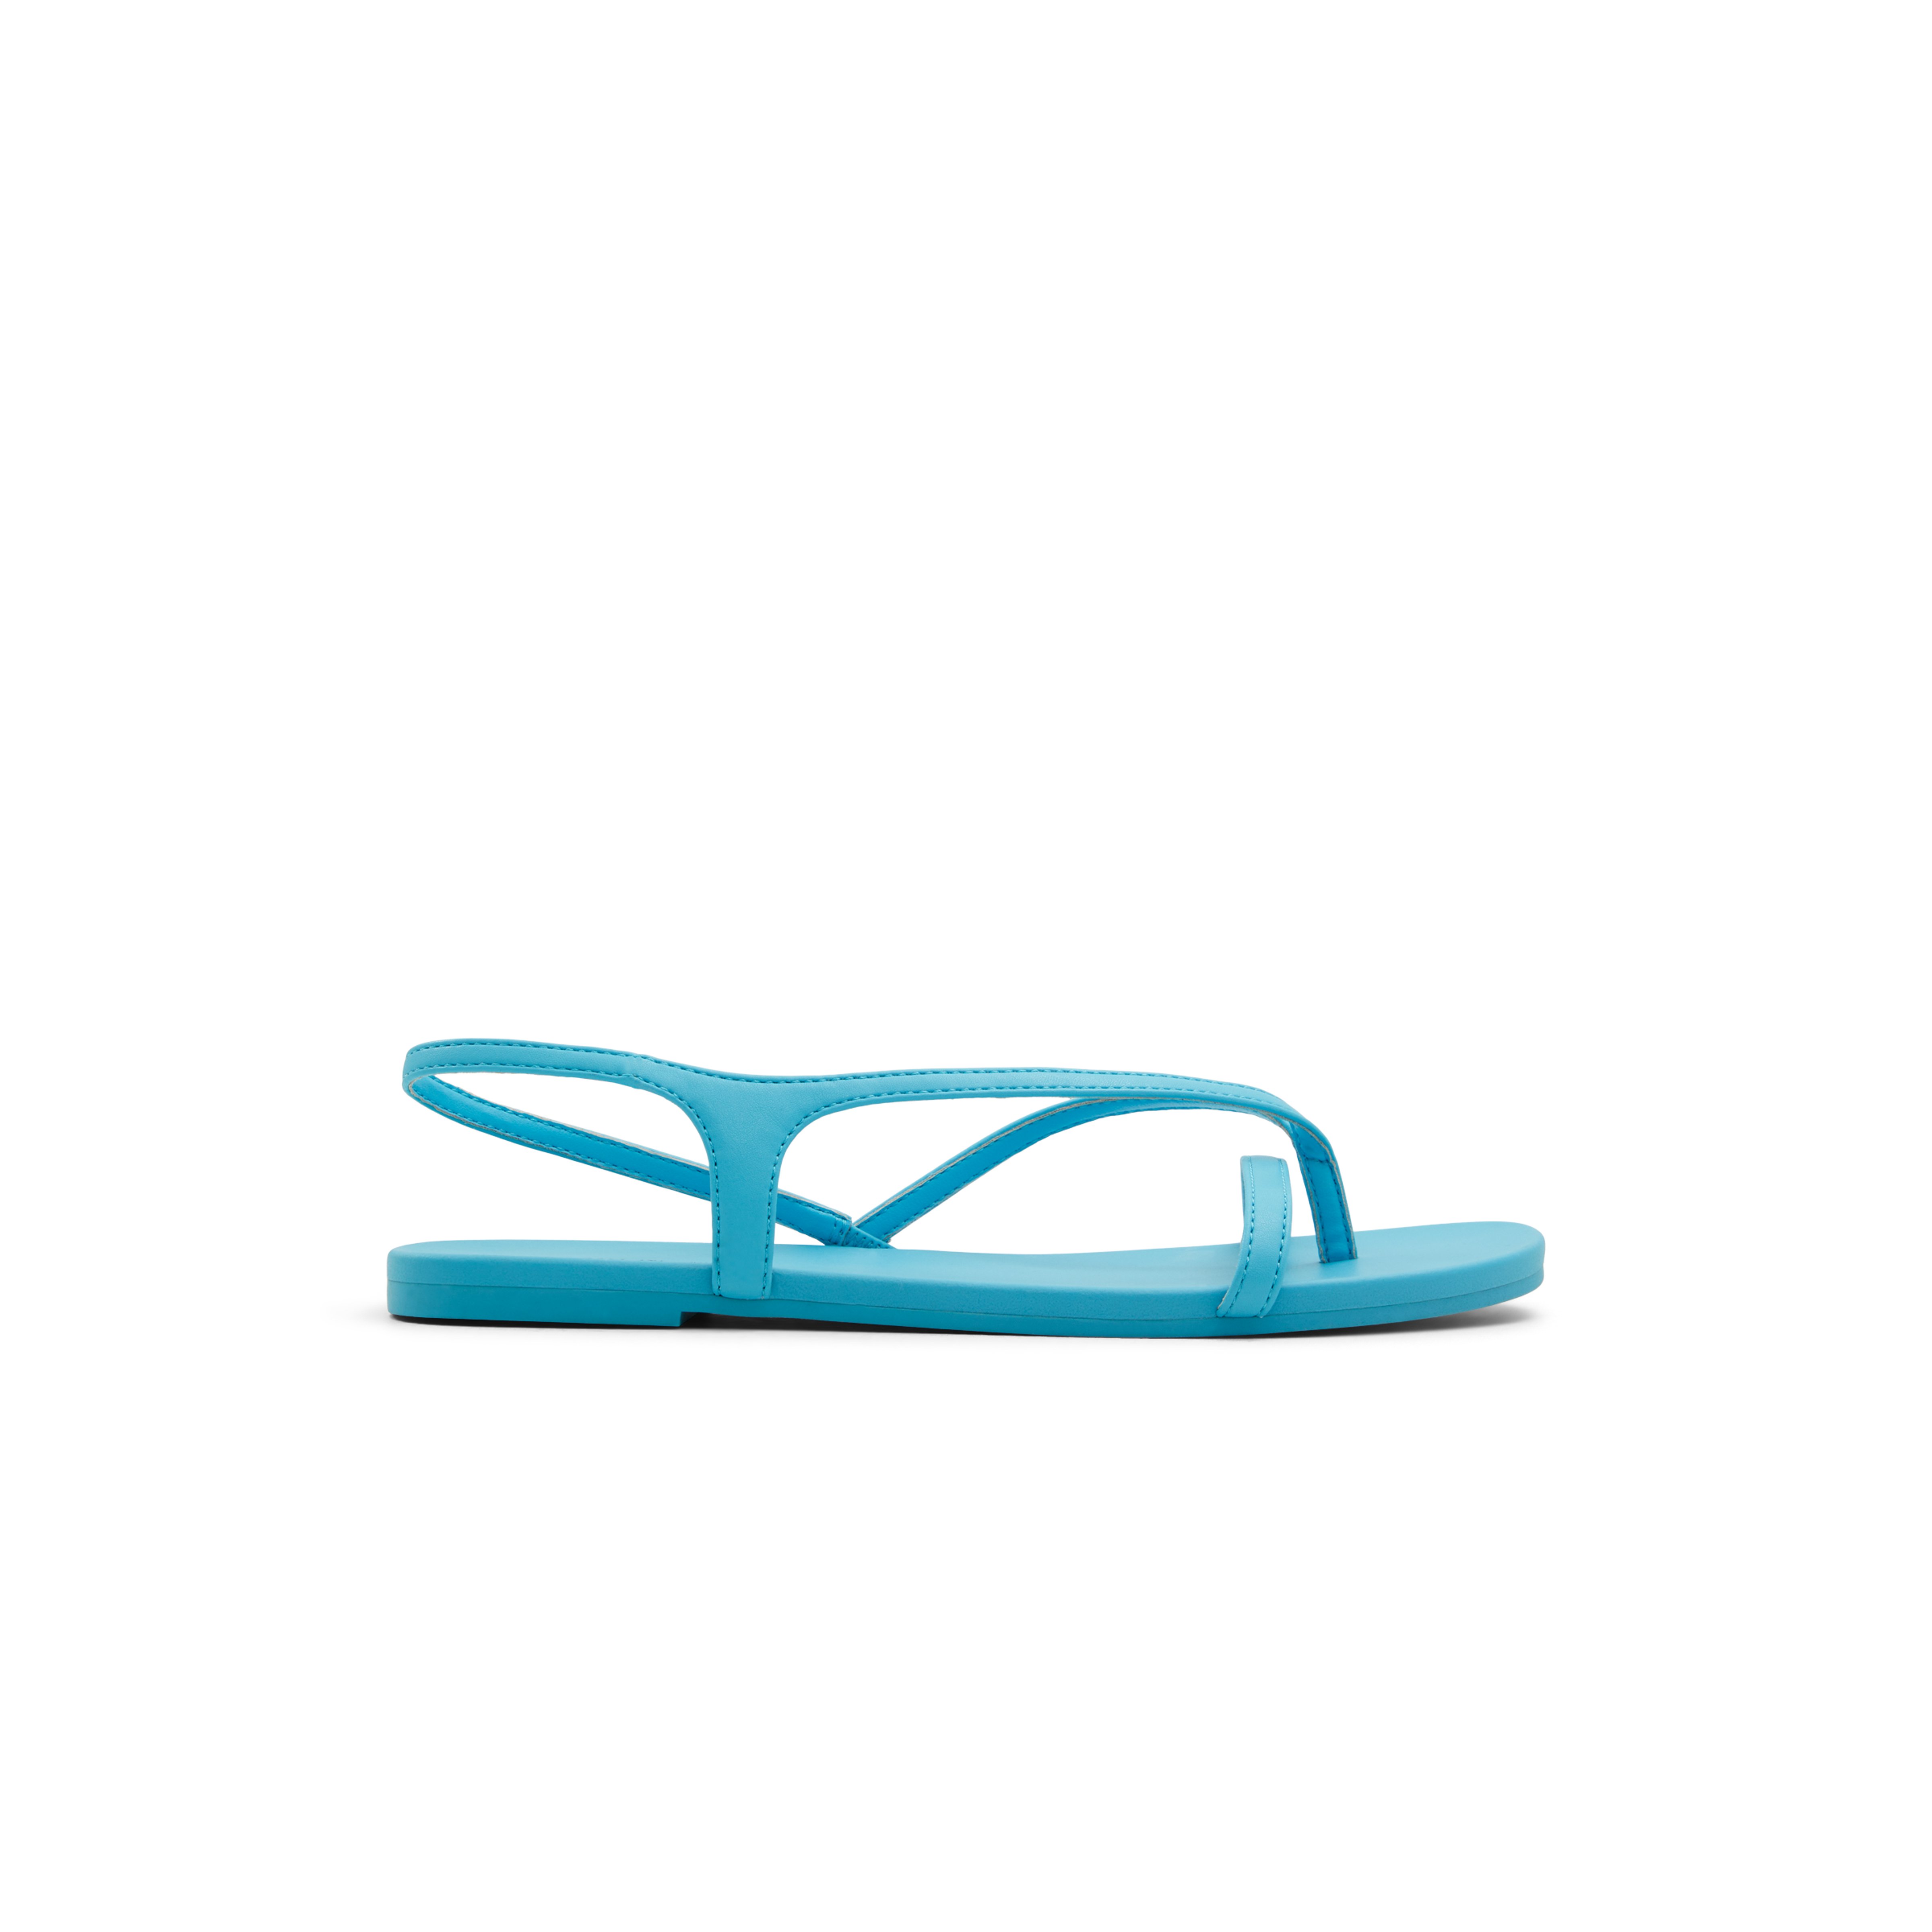 Montebello Women's Blue Flat Sandals image number 0